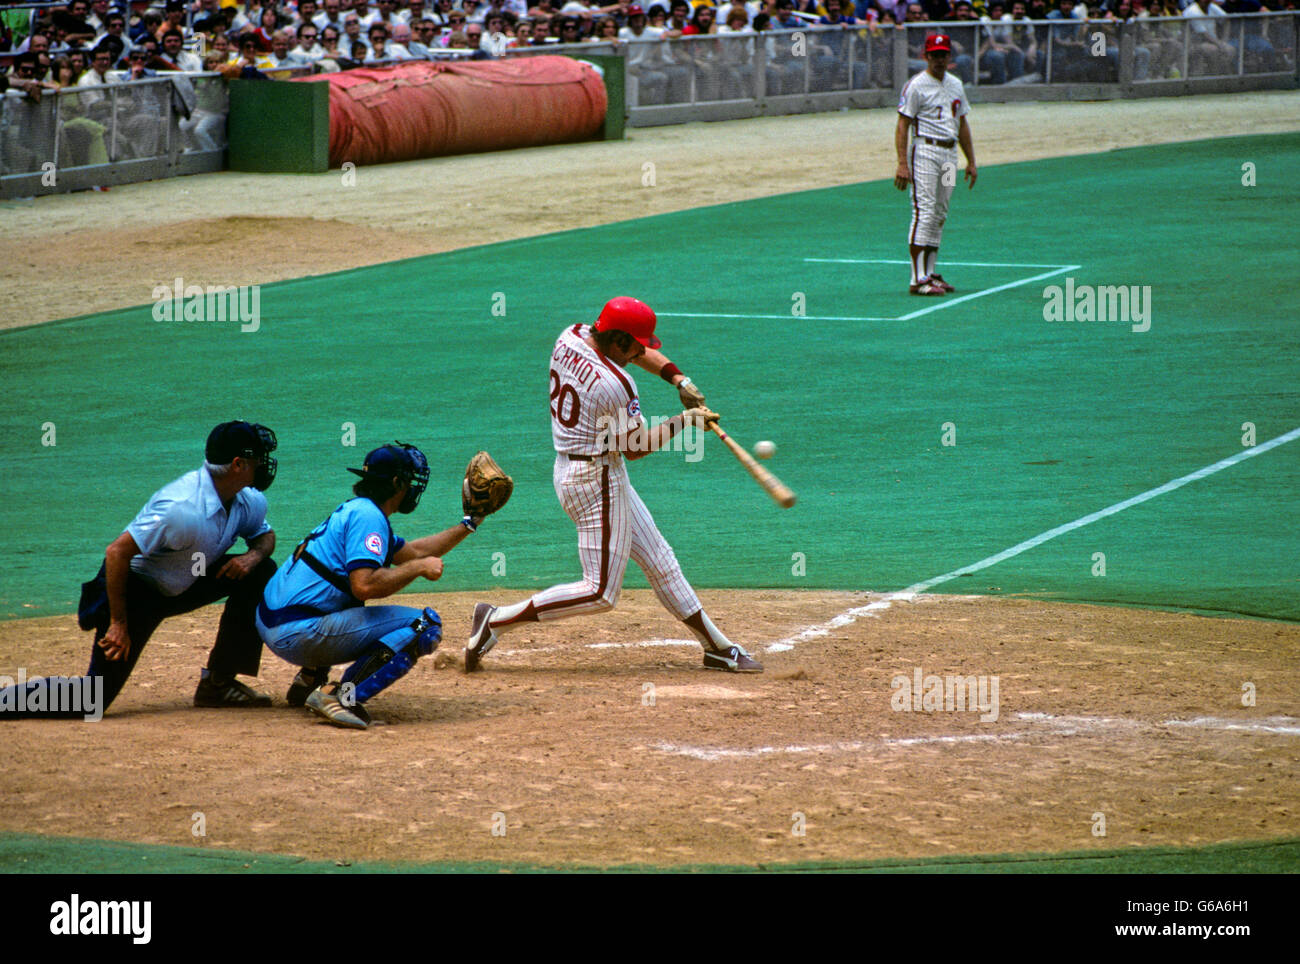 1980 MIKE SCHMIDT número 20 BATTING PHILLIES Y Chicago Cubs Juego de baseball Veteran's stadium de Filadelfia, PA, EE.UU. Foto de stock